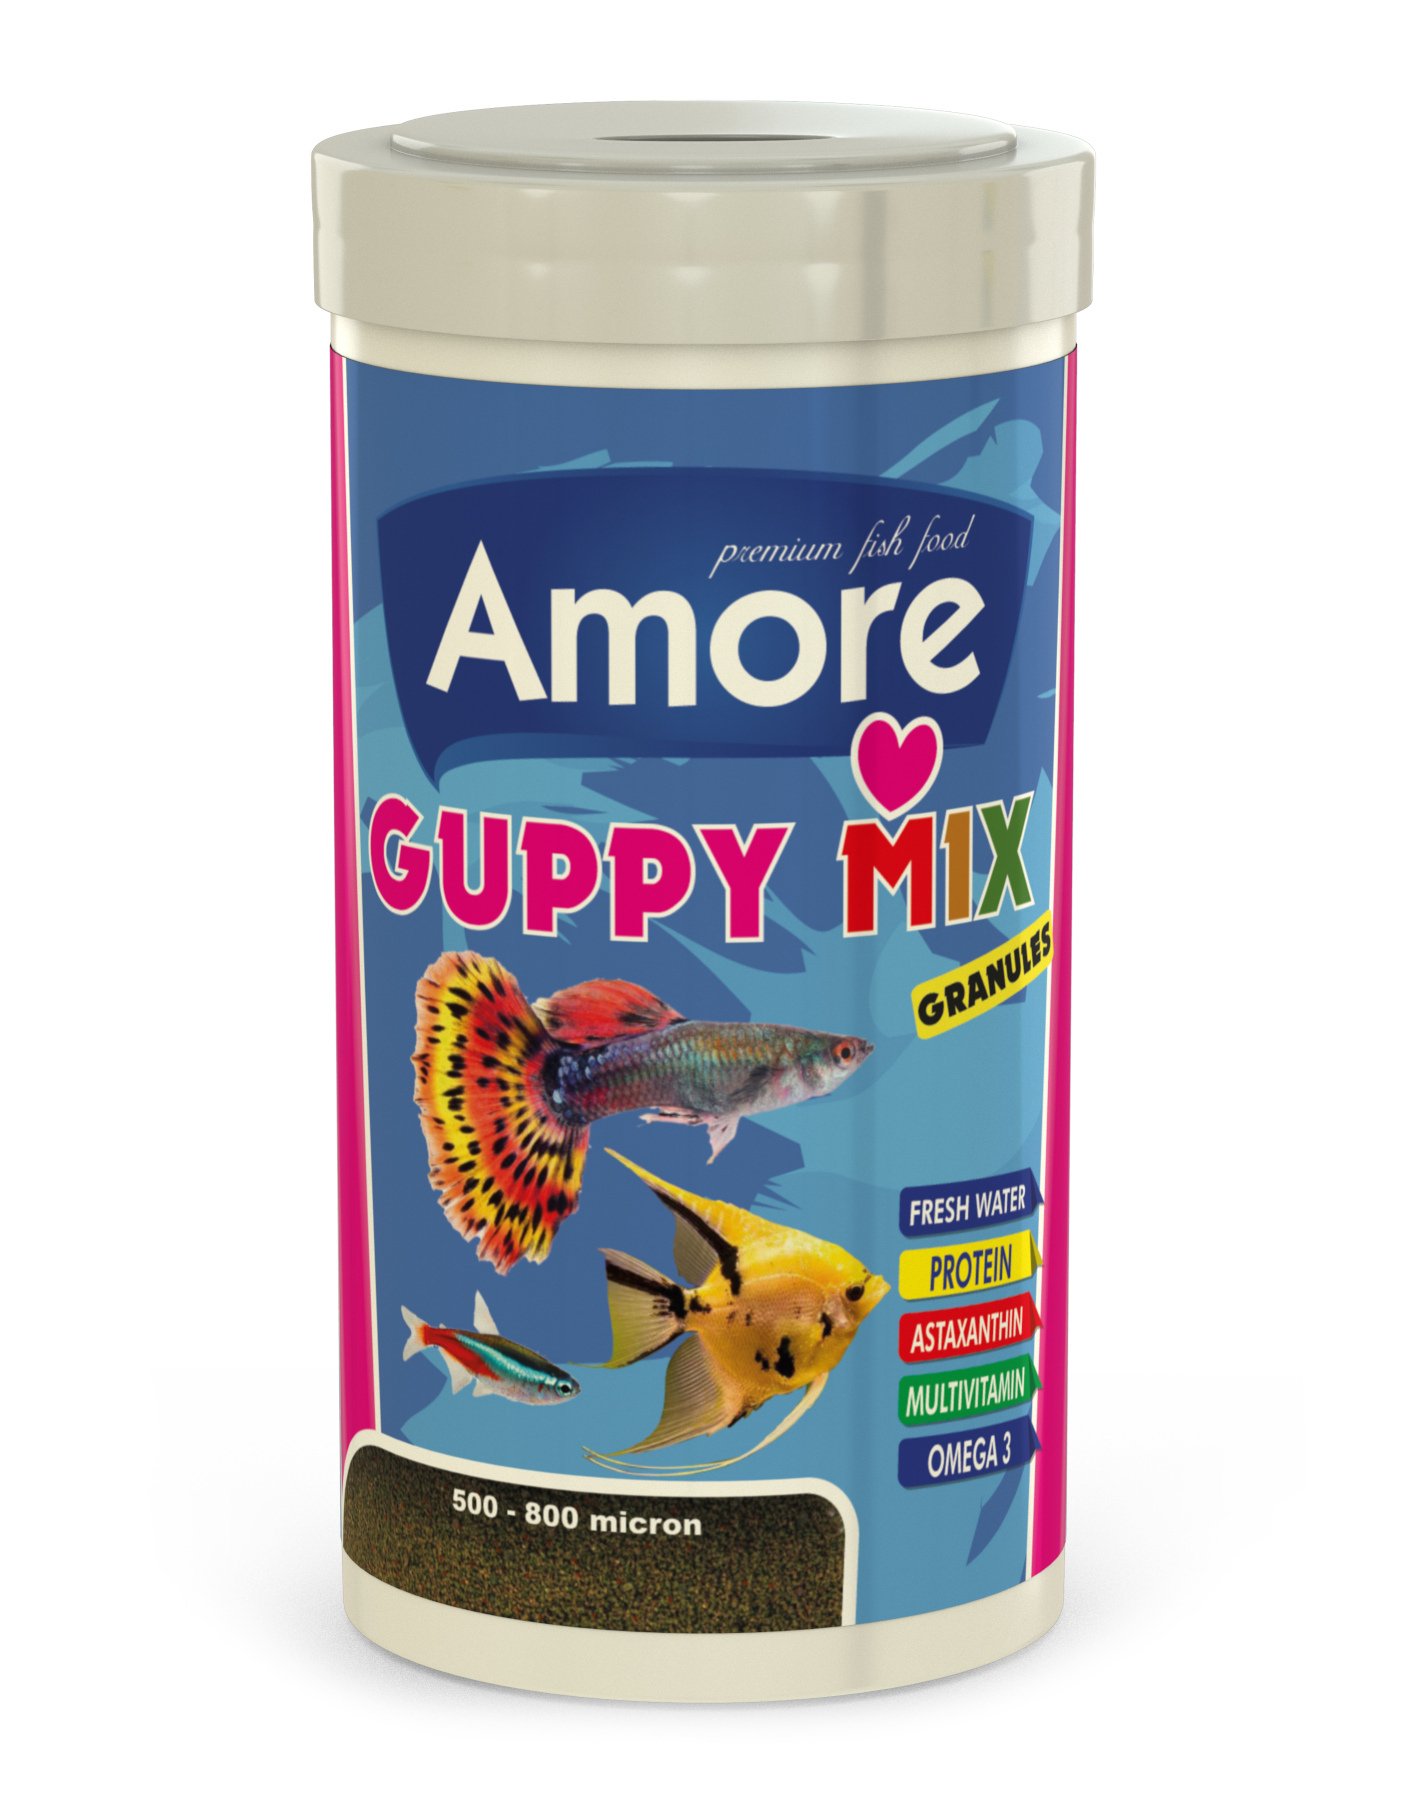 Amore Guppy Mix 250ml, Lotus Tropical Granulat 250ml, Micron 100ml Yavru Yemi, Sera Crystal Clear 2 Adet